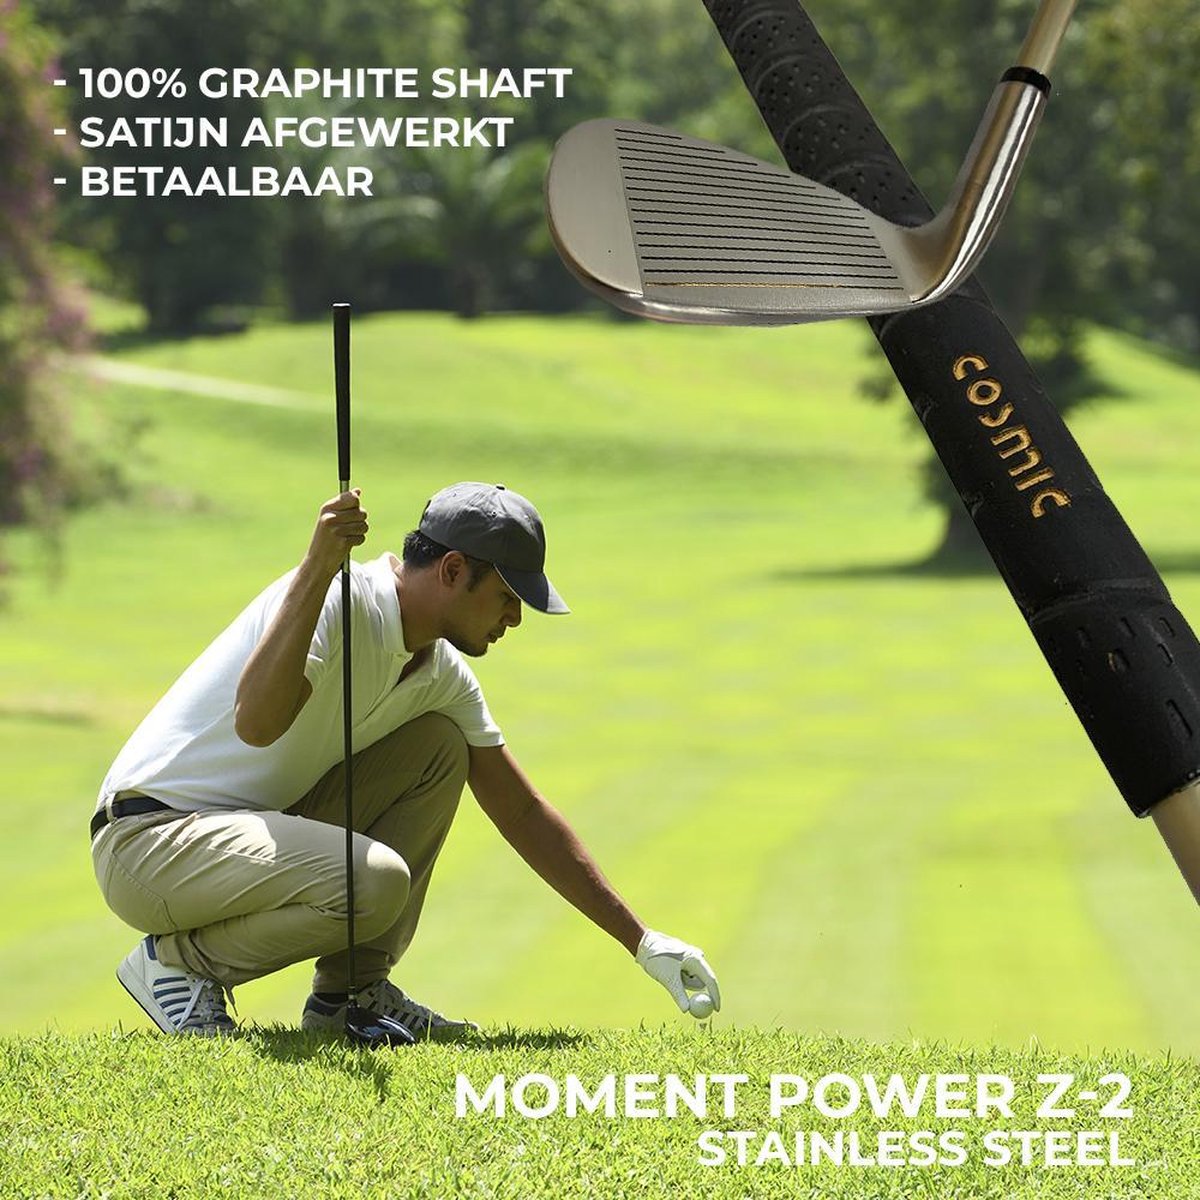 Cosmic moment power Z2R - Ultra lightweight hi-modulus graphite - Betaalbare golfclubs - Golfclubset - Met golftas!